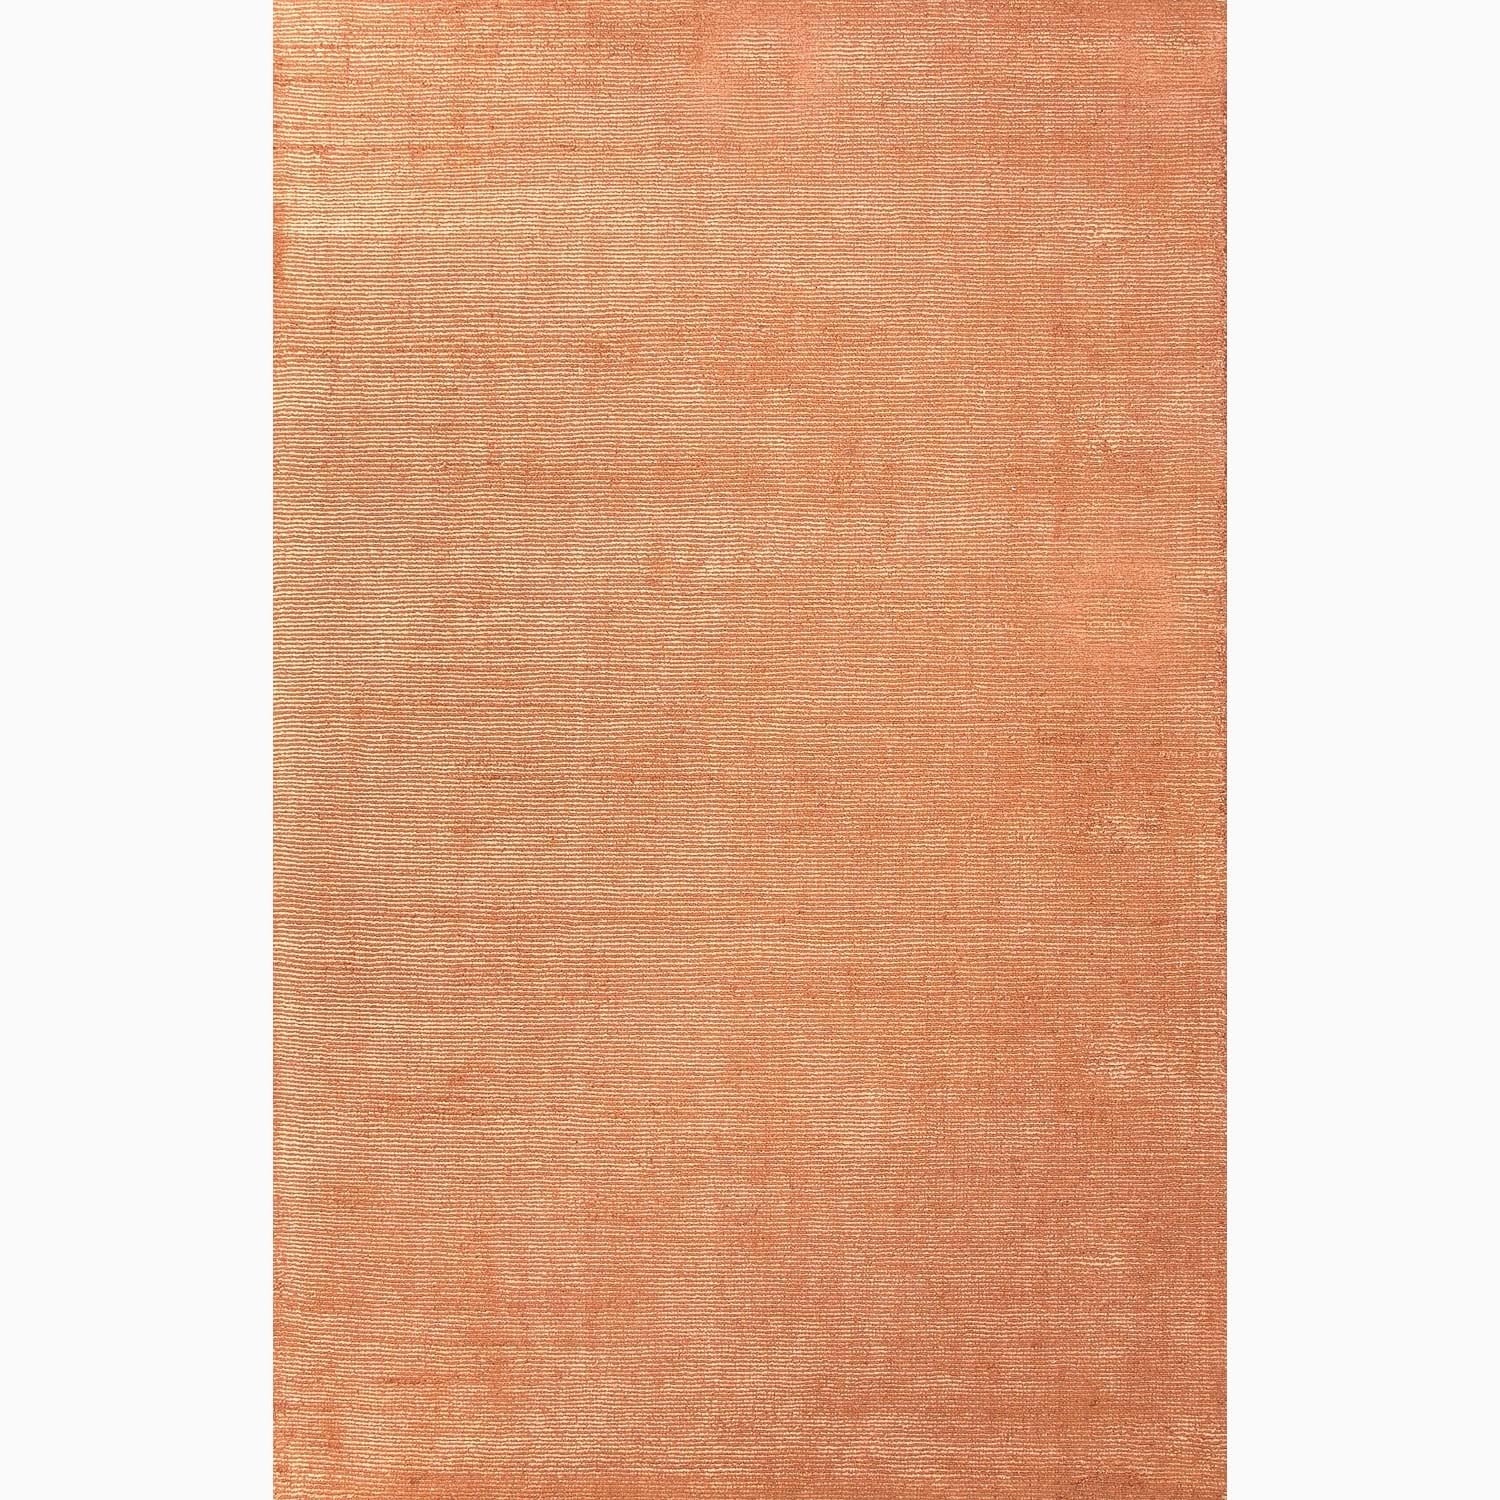 Handmade Solid Pattern Orange Wool/ Art Silk Rug (36 X 56)